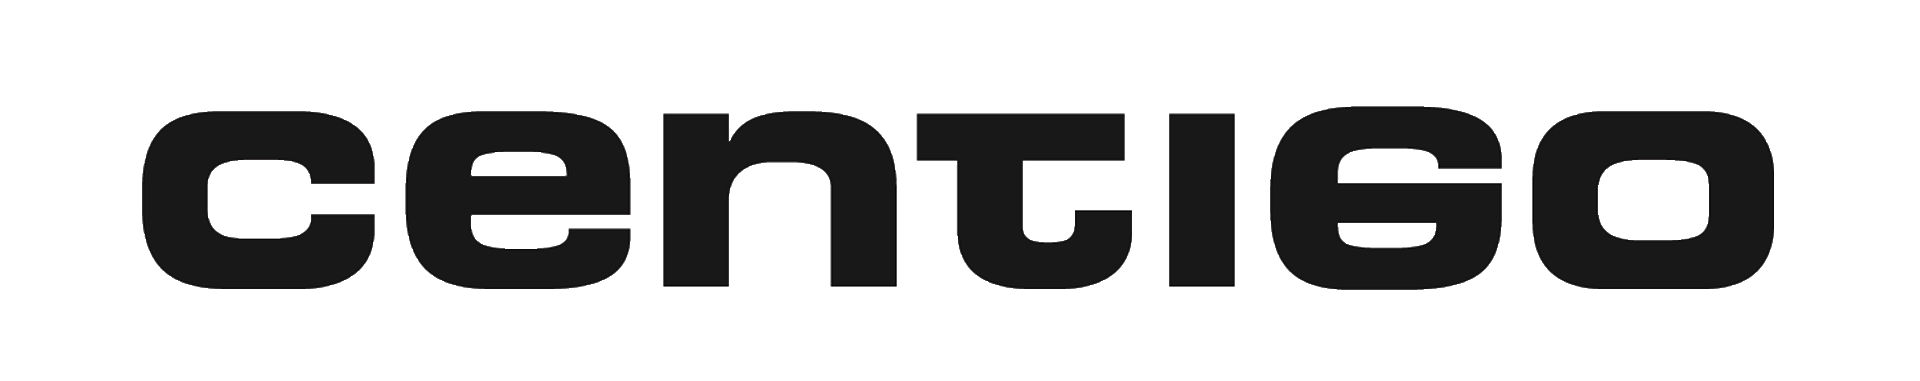 Centigo logo in black and white.